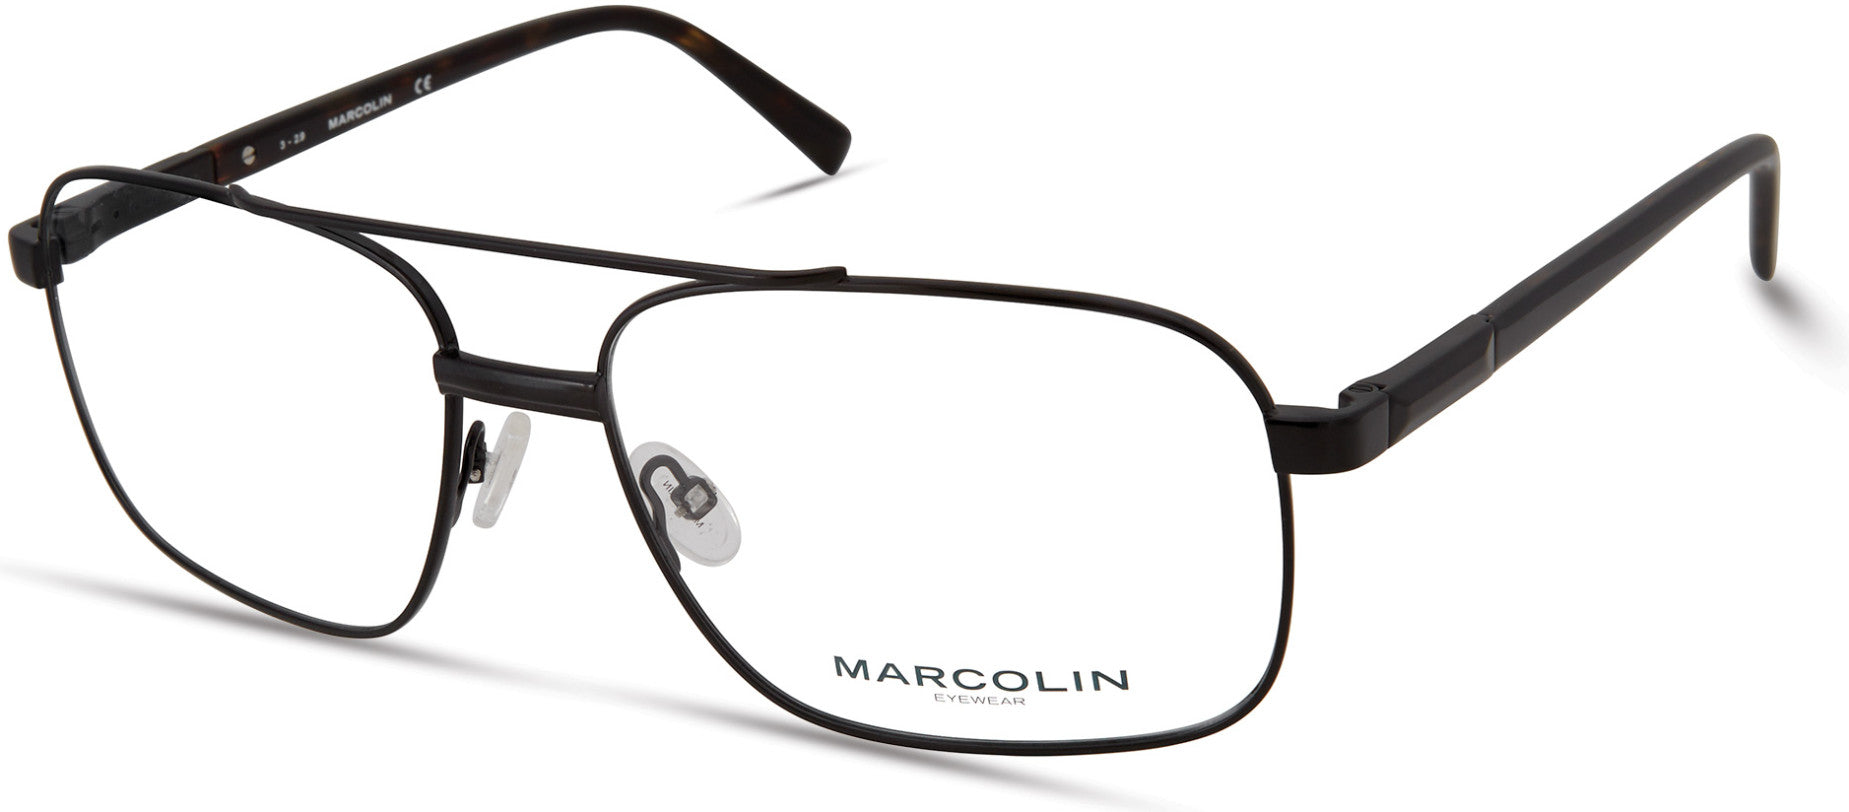 Marcolin MA3022 Navigator Eyeglasses 001-001 - Shiny Black